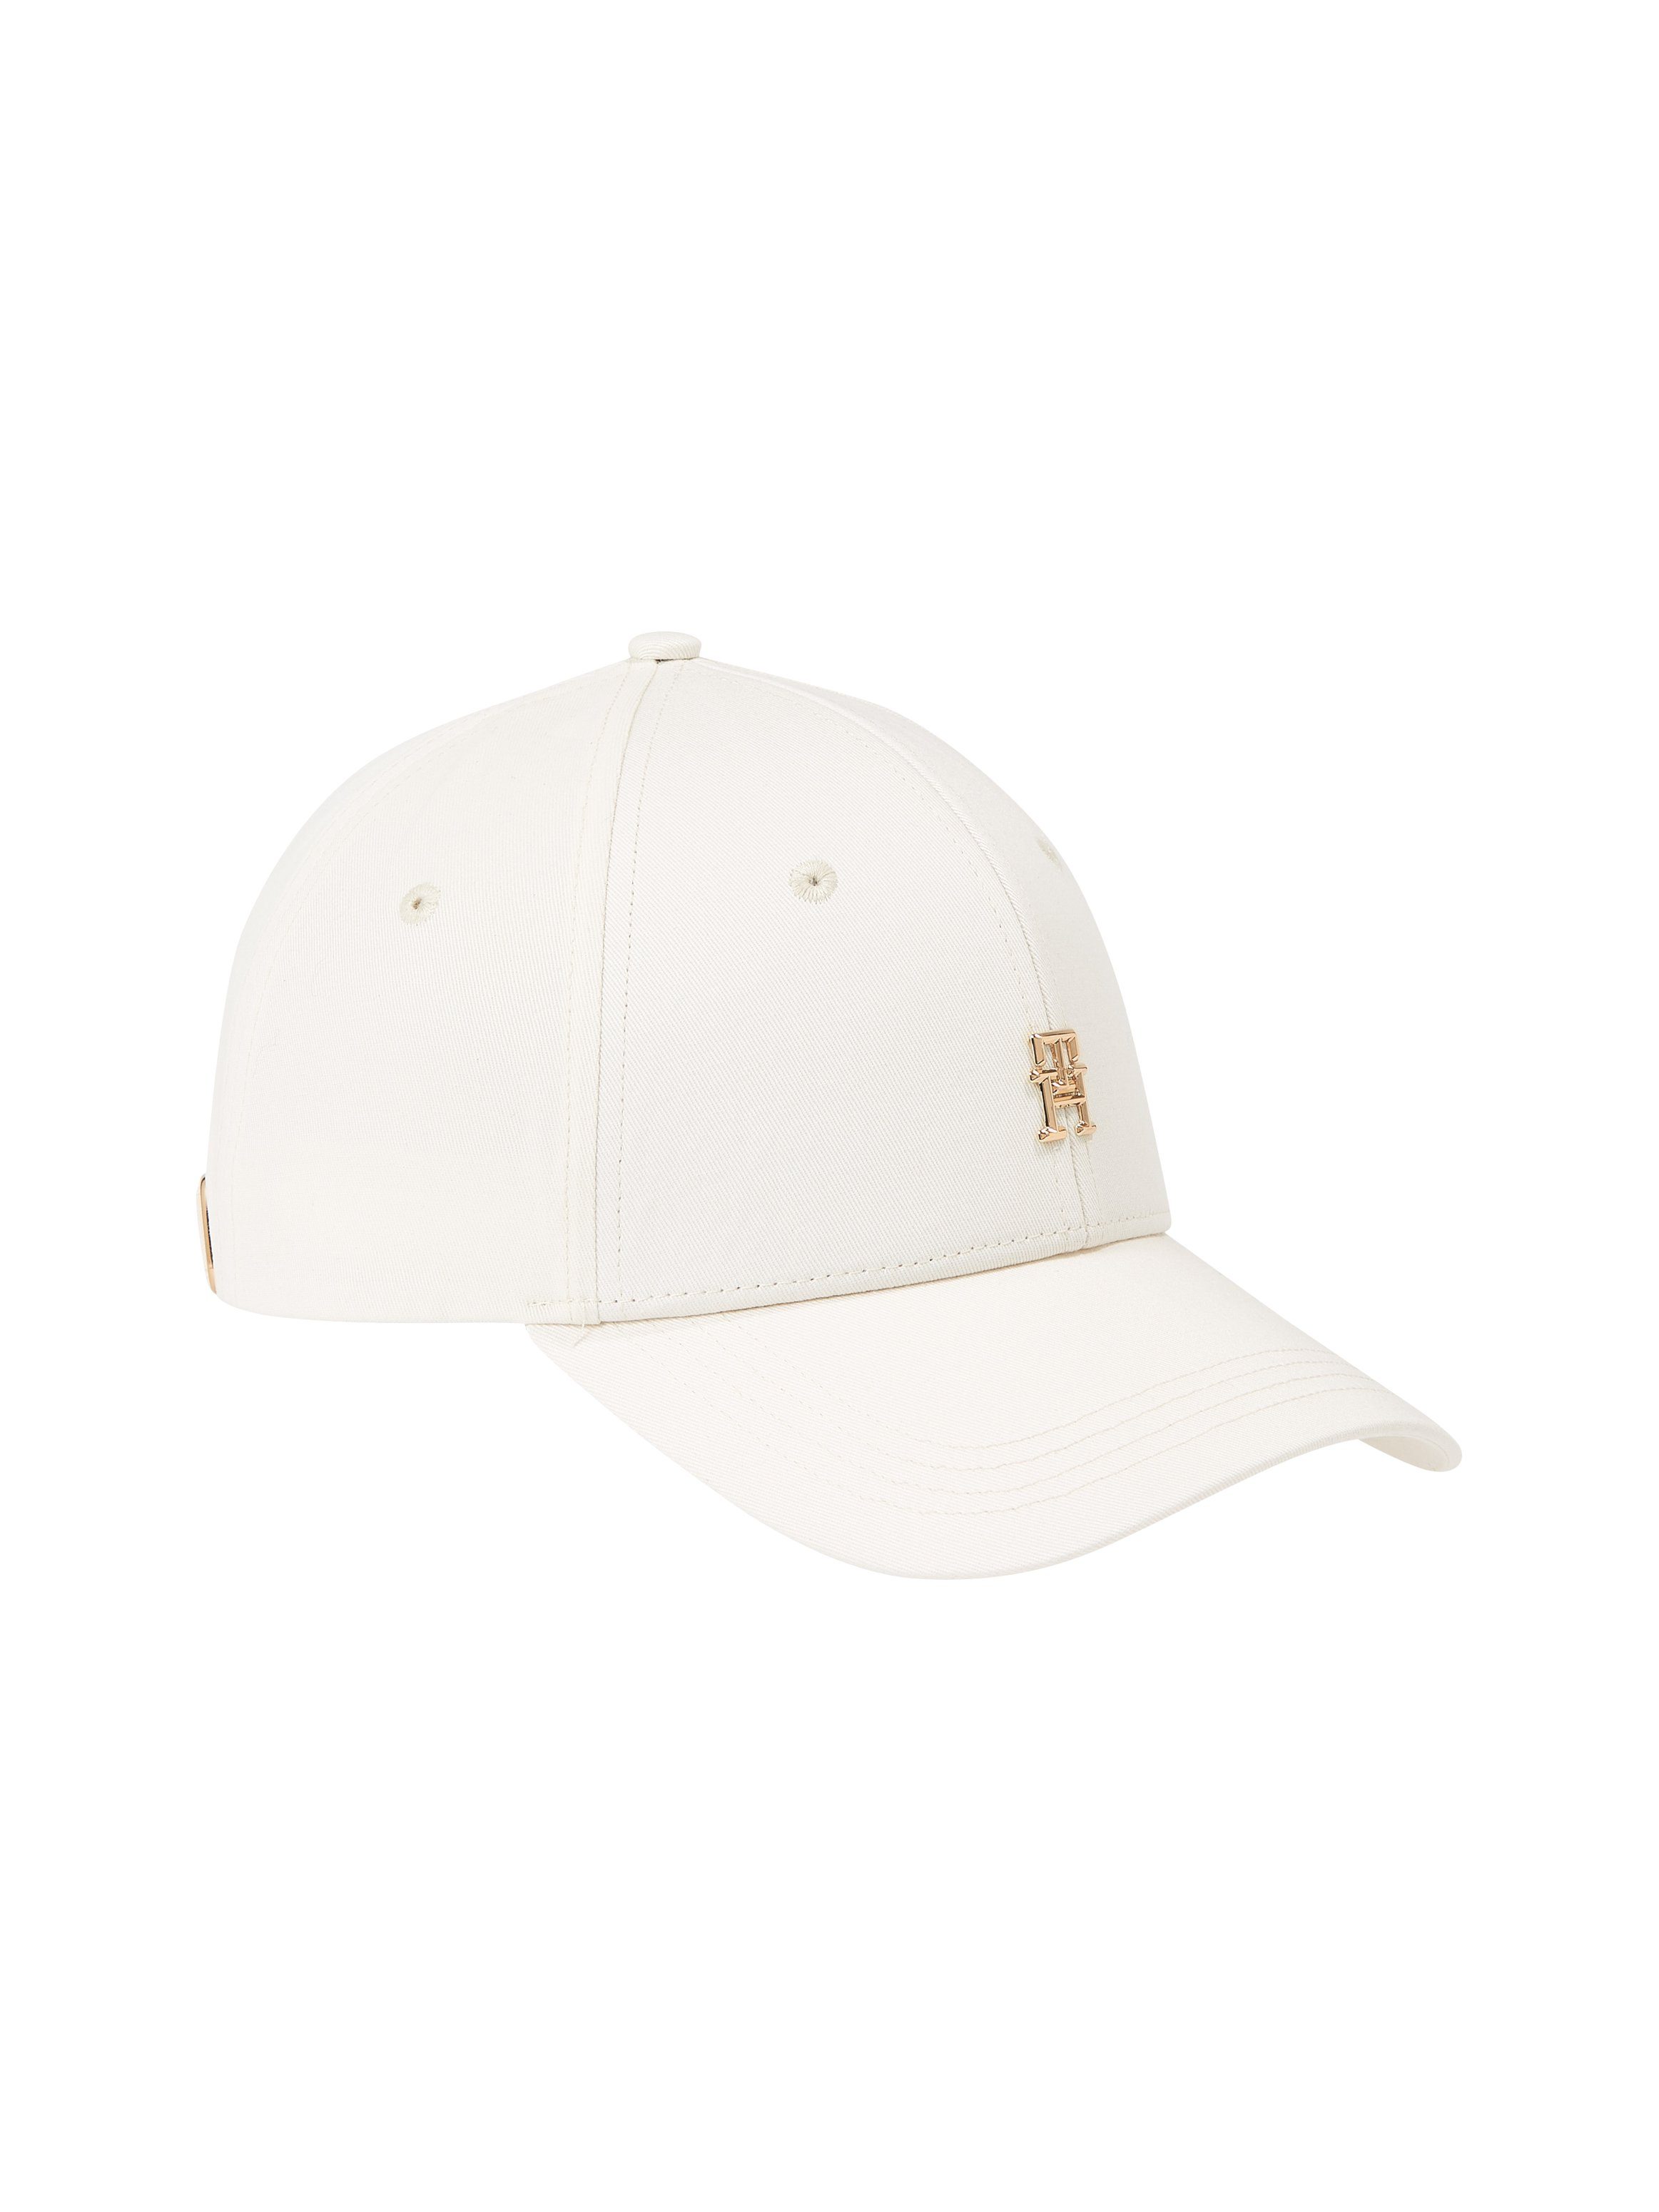 Tommy Hilfiger Baseball Cap ESSENTIAL goldfarbenen Logo-Pin Calico CHIC mit CAP